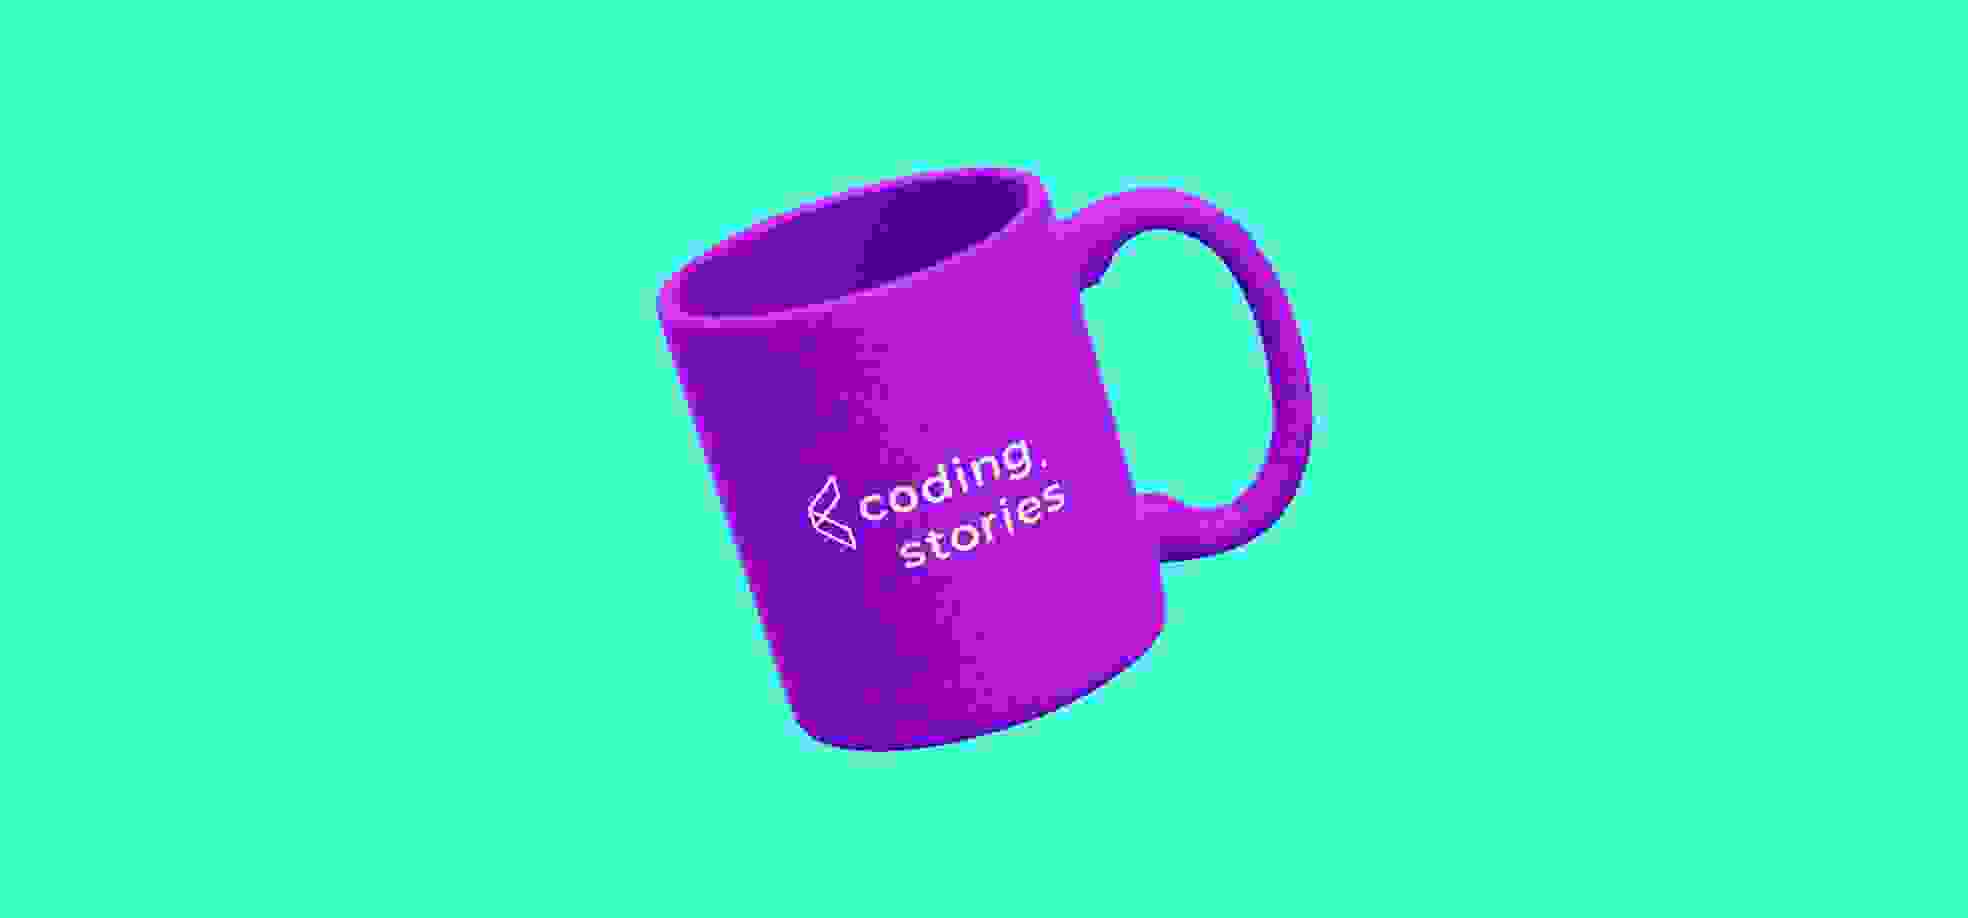 a purple mug illustration with the Coding stories logo 